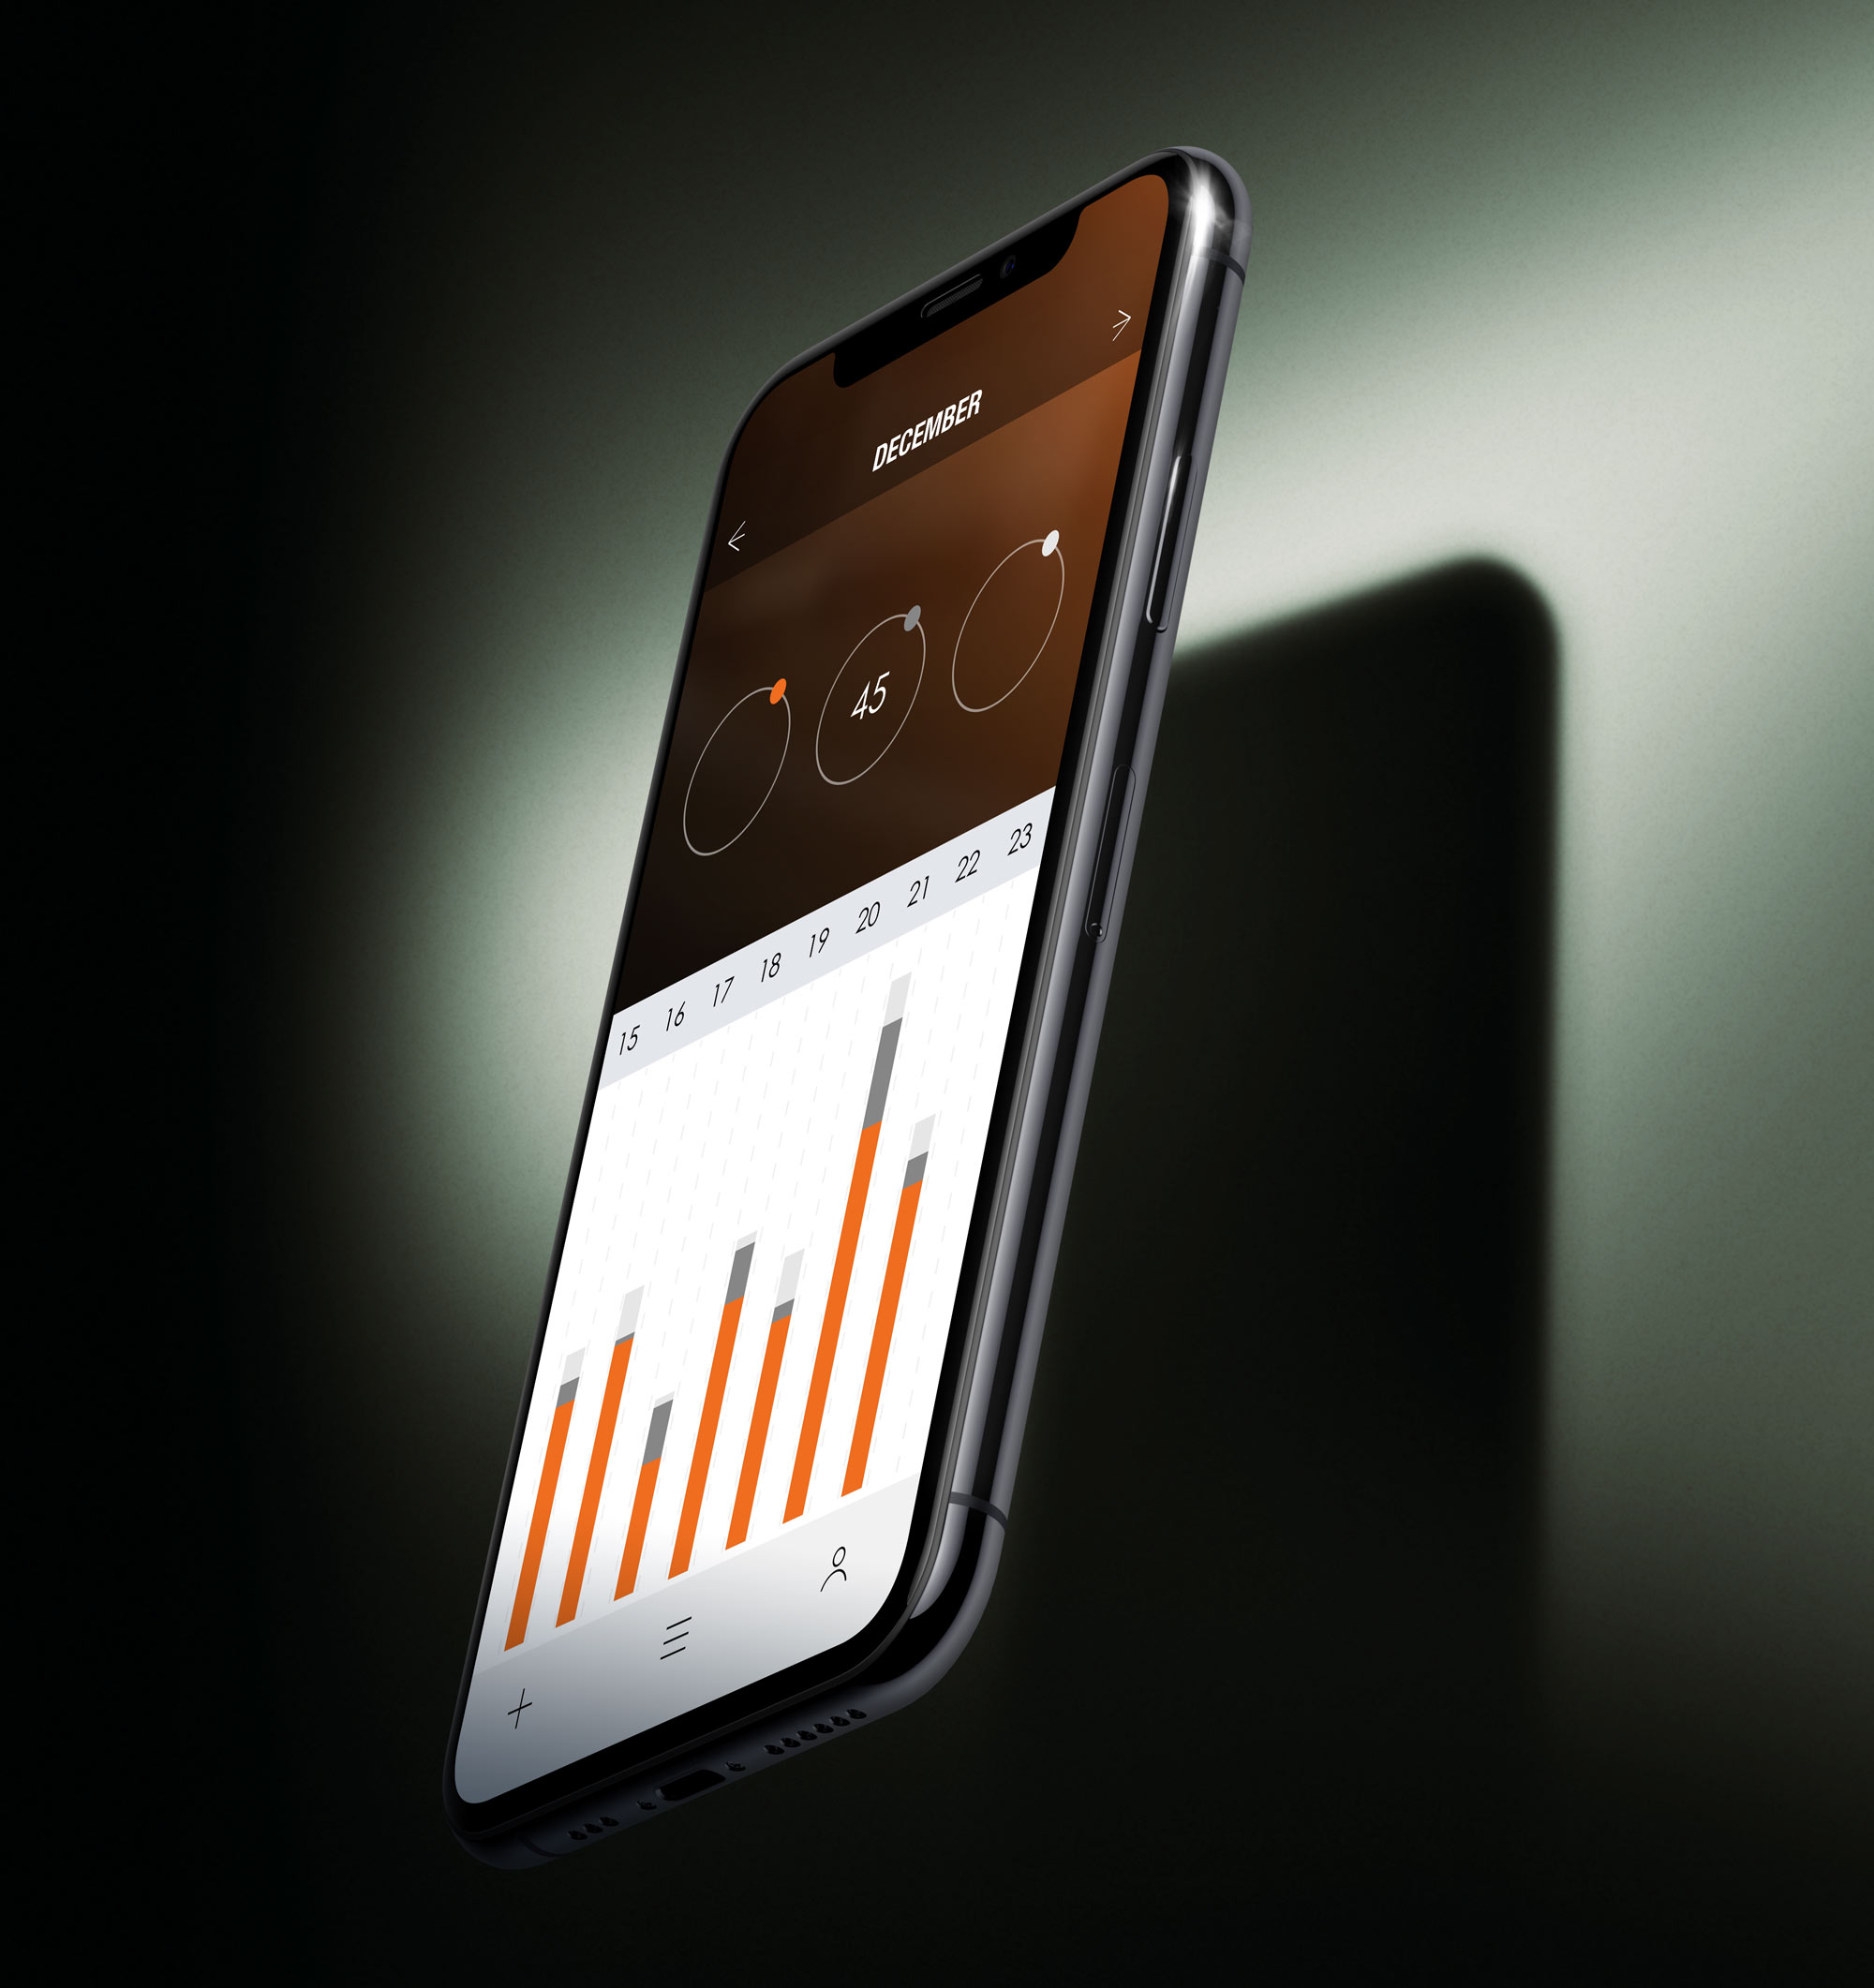 A phone UX screen display of a bar graph.